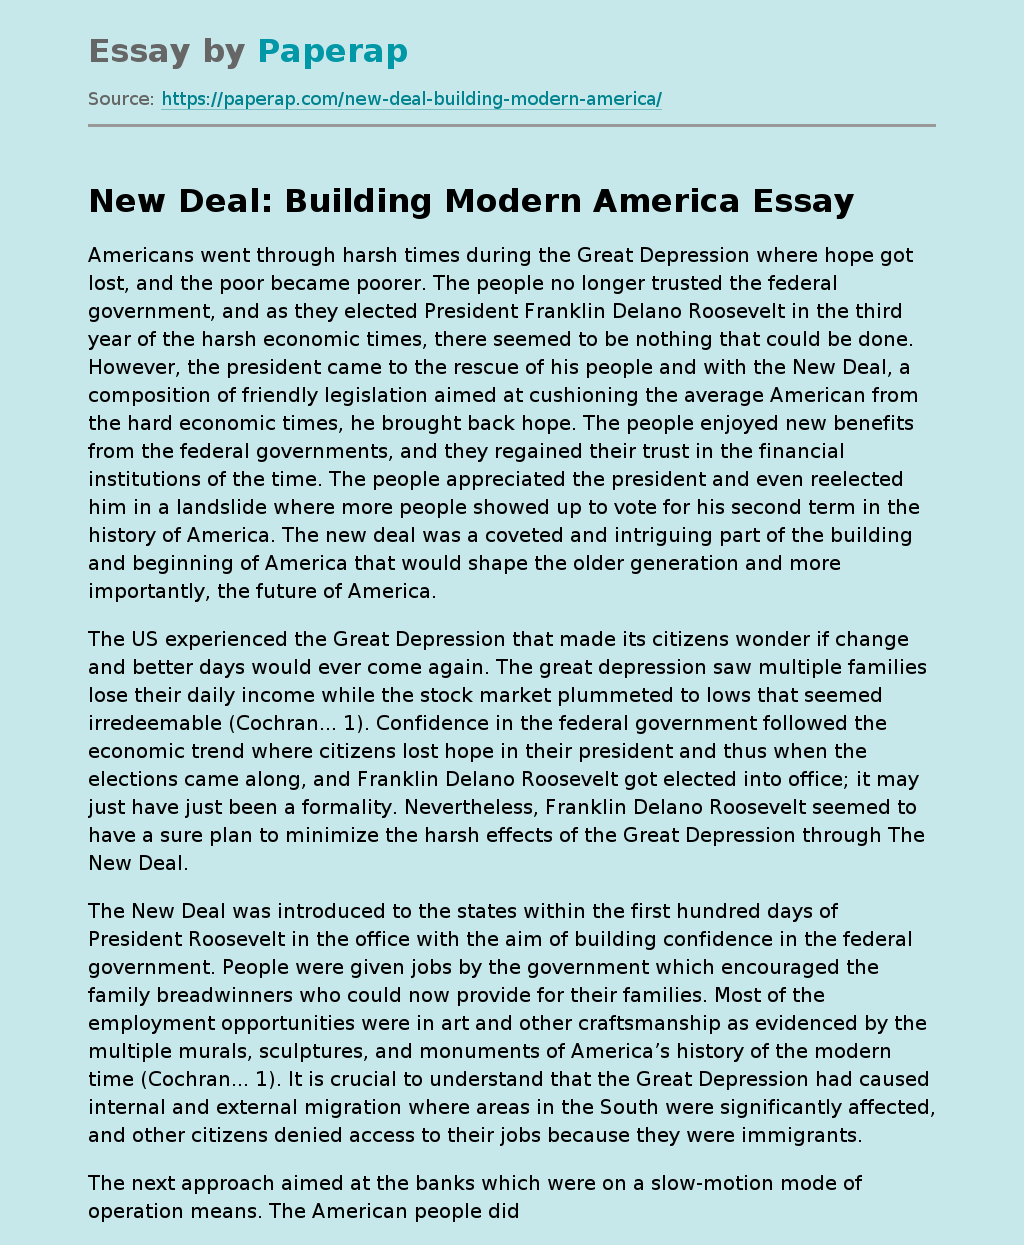 New Deal: Building Modern America